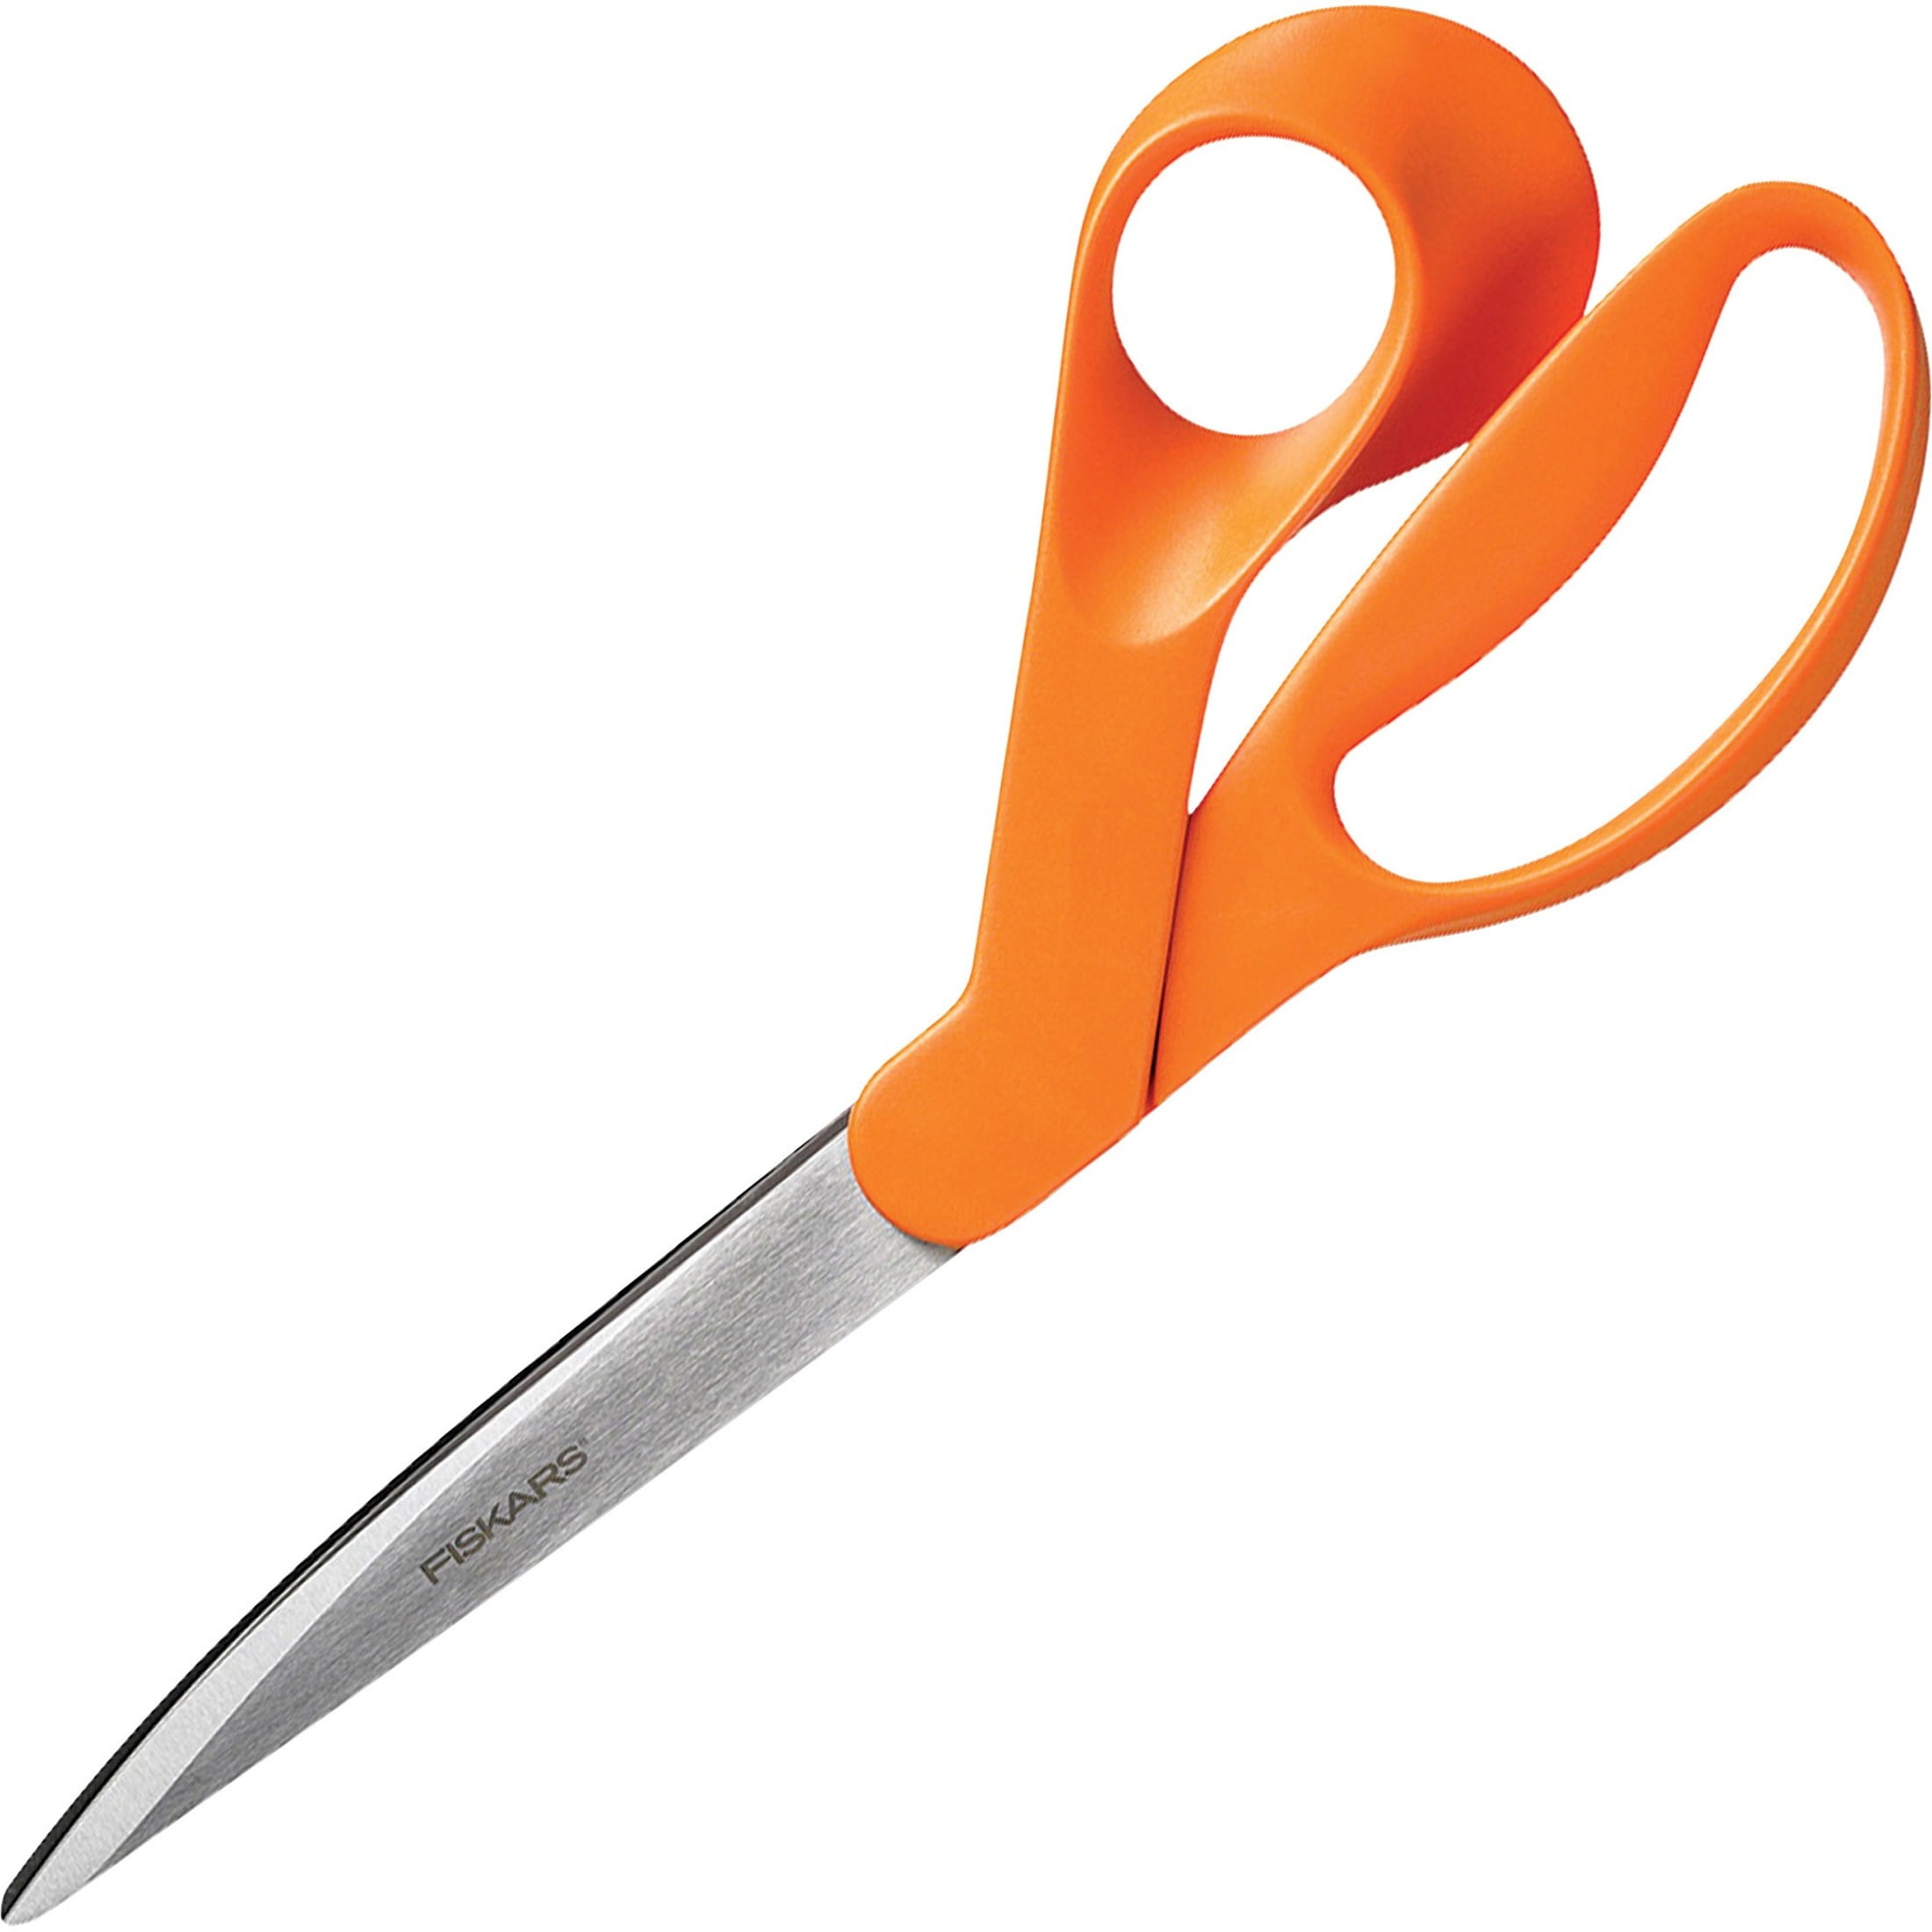 Fiskars Premier Thread Snips Sewing Scissors, Orange